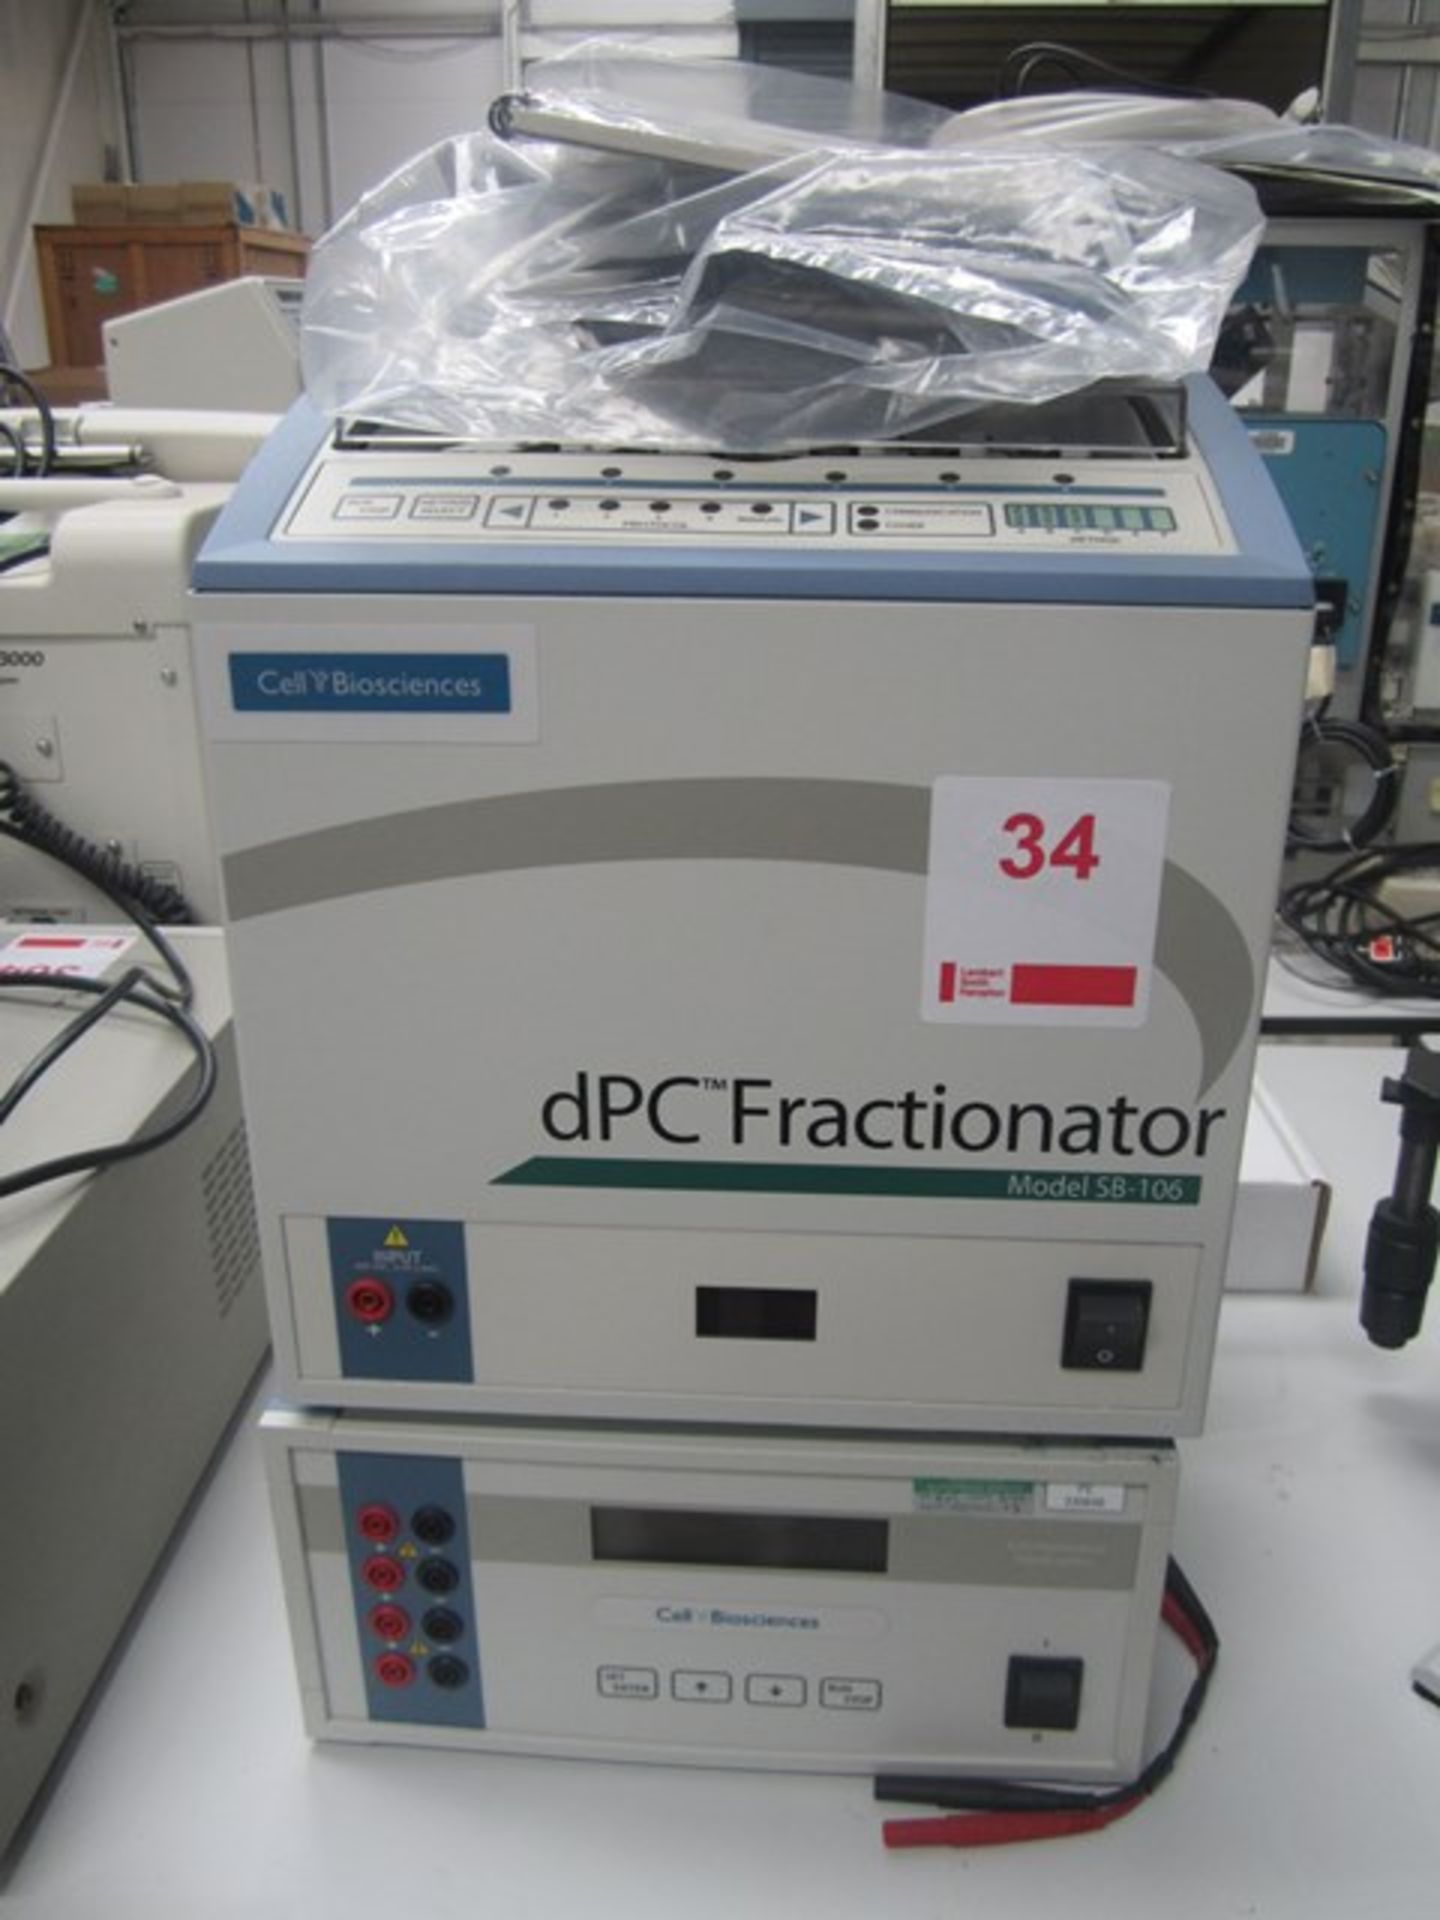 Cell Biosciences SB-106 DPC fractionator with power lead